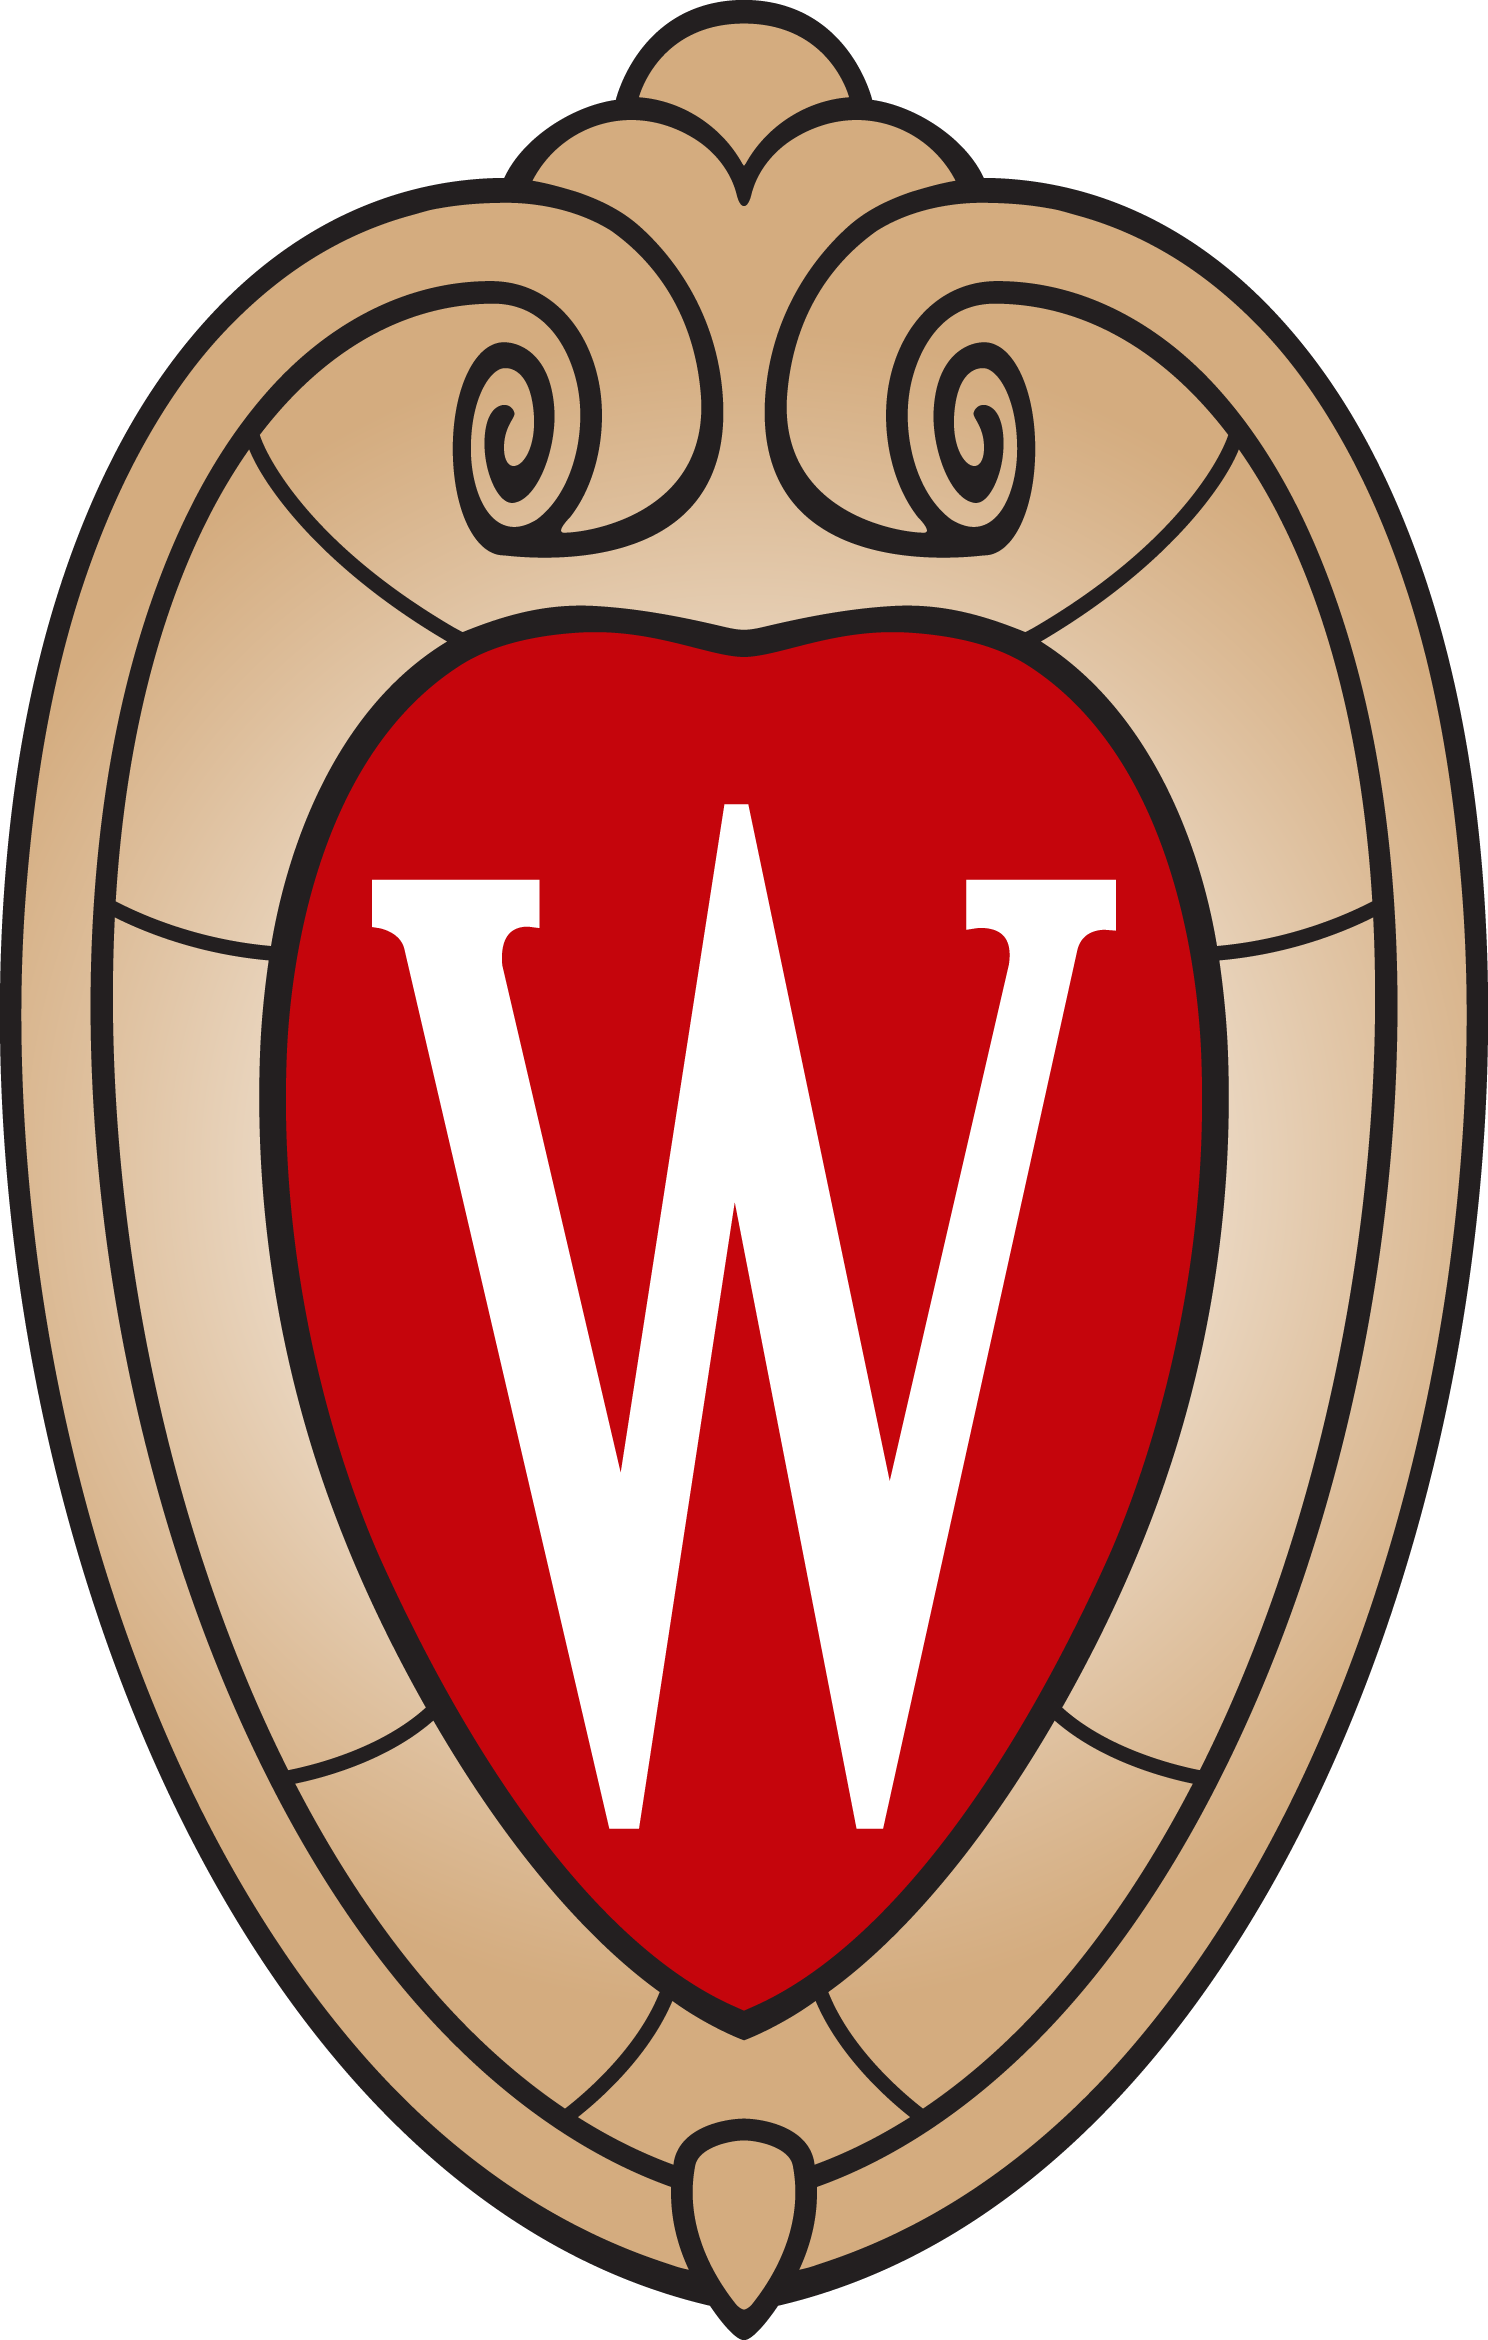 University of Wisconsin - Madison Crest